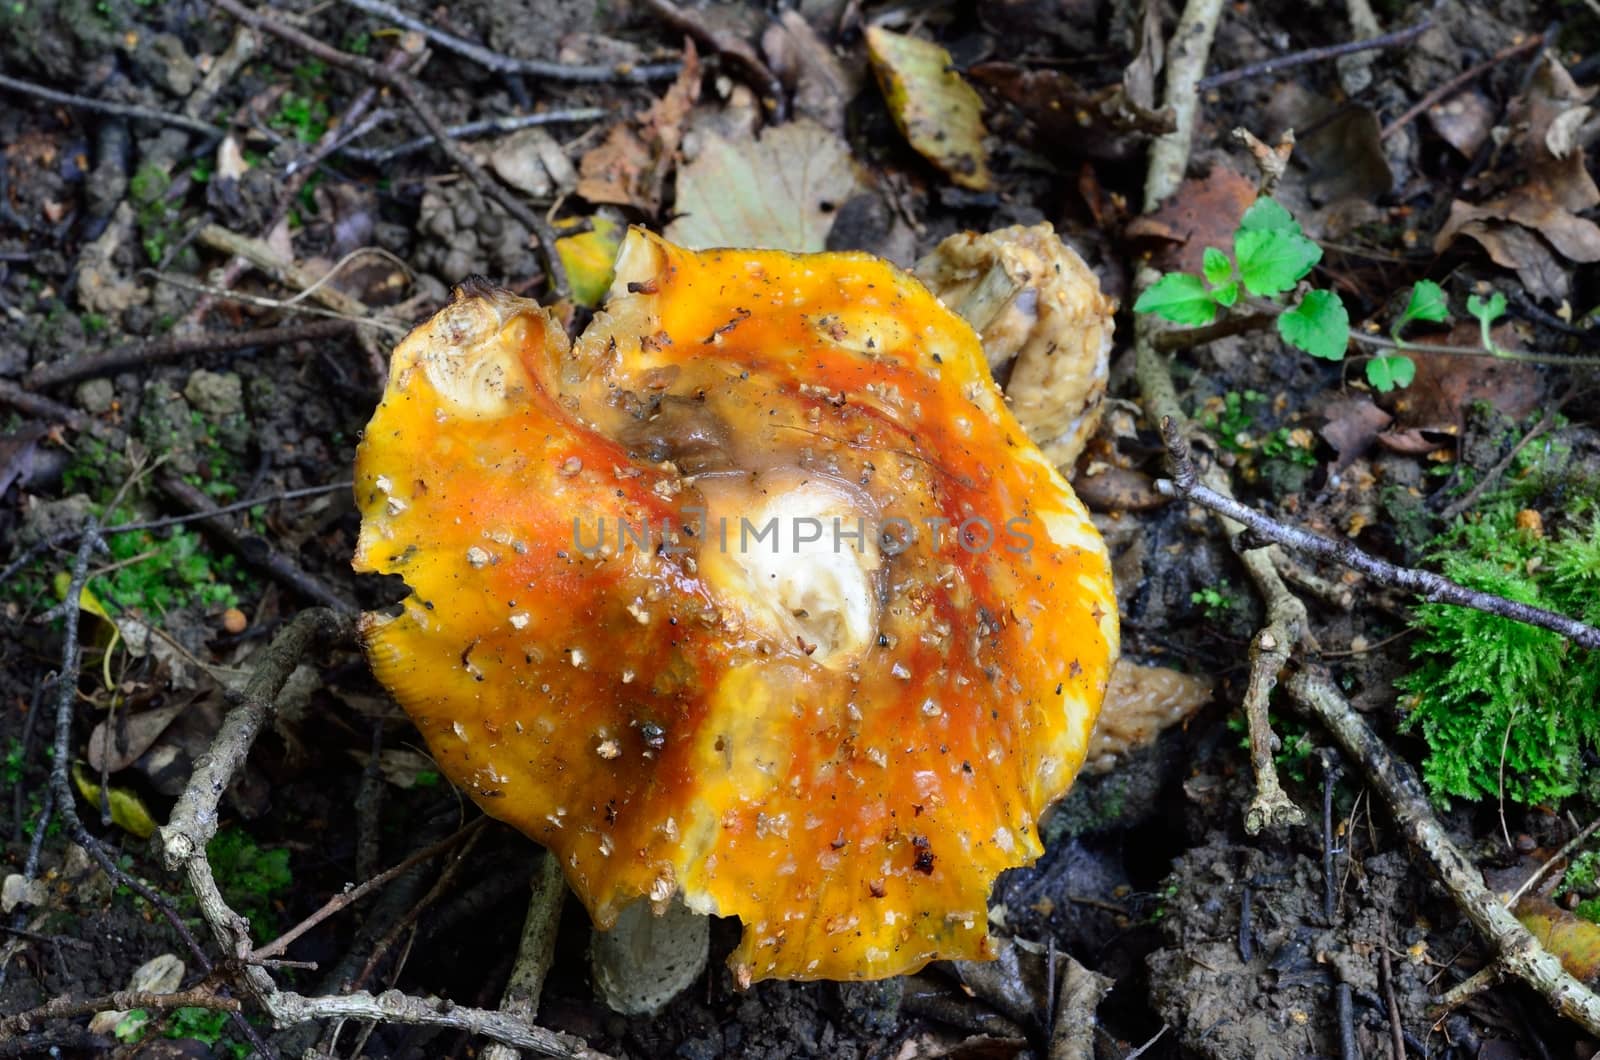 Decaying orange mushroom by pauws99